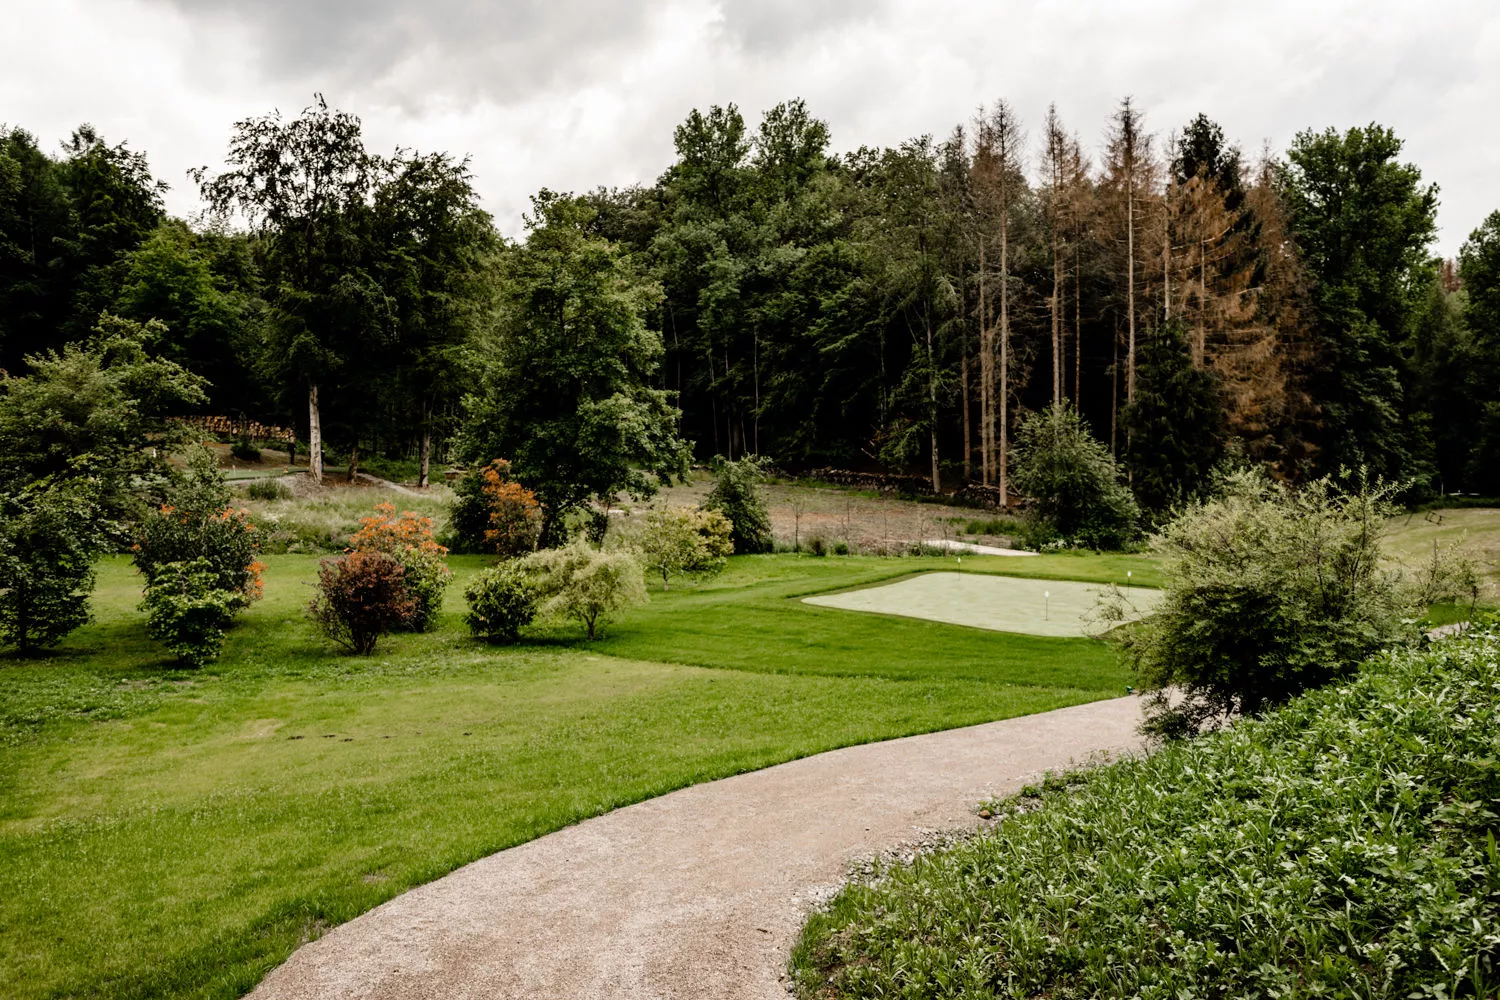 Gut Landscheid - Golf course